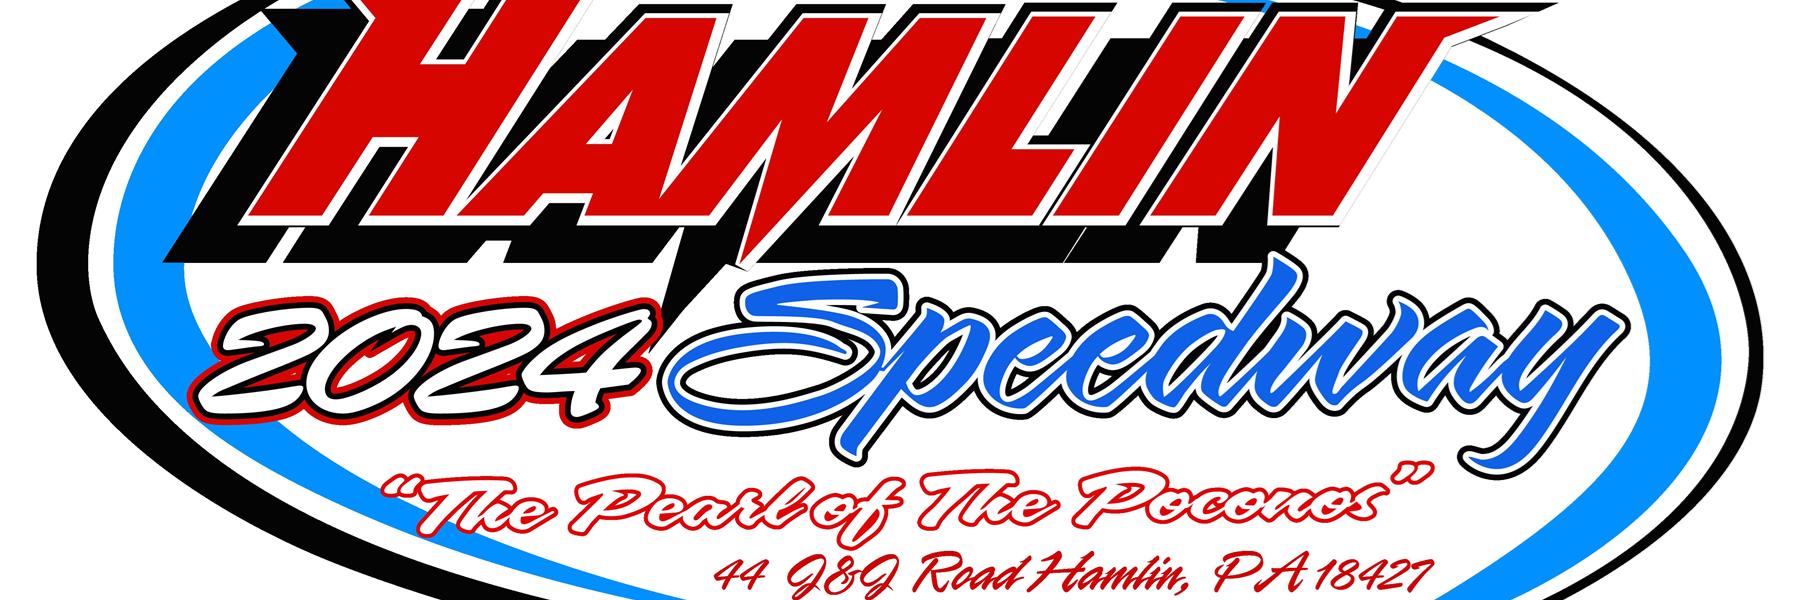 8/12/2017 - Hamlin Speedway